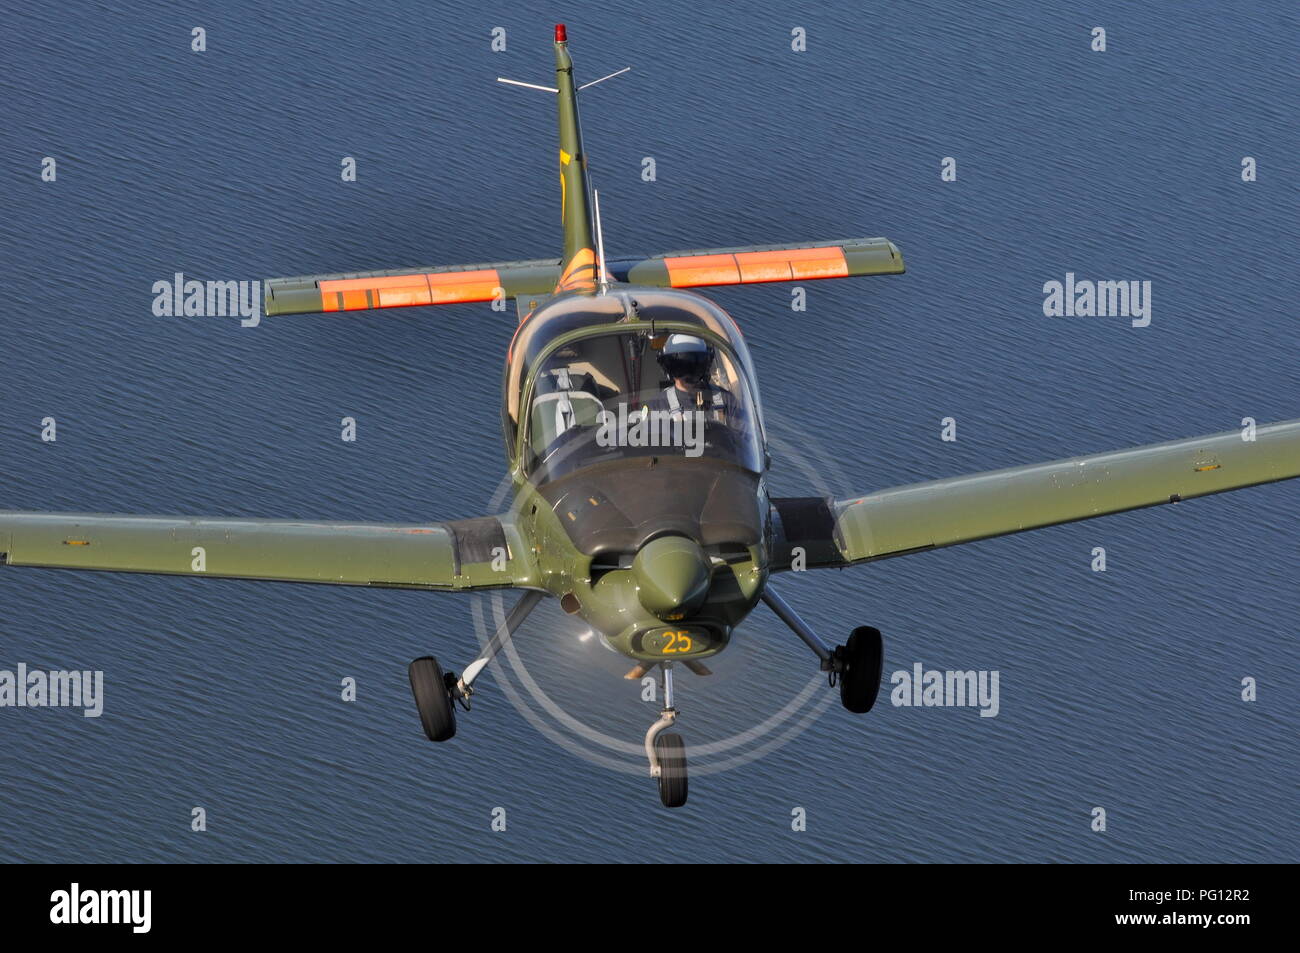 SCOTTISH AVIATION SK-61 BULLDOG OF THE SWEDISH AIR FORCE HISTORIC FLIGHT. Stock Photo